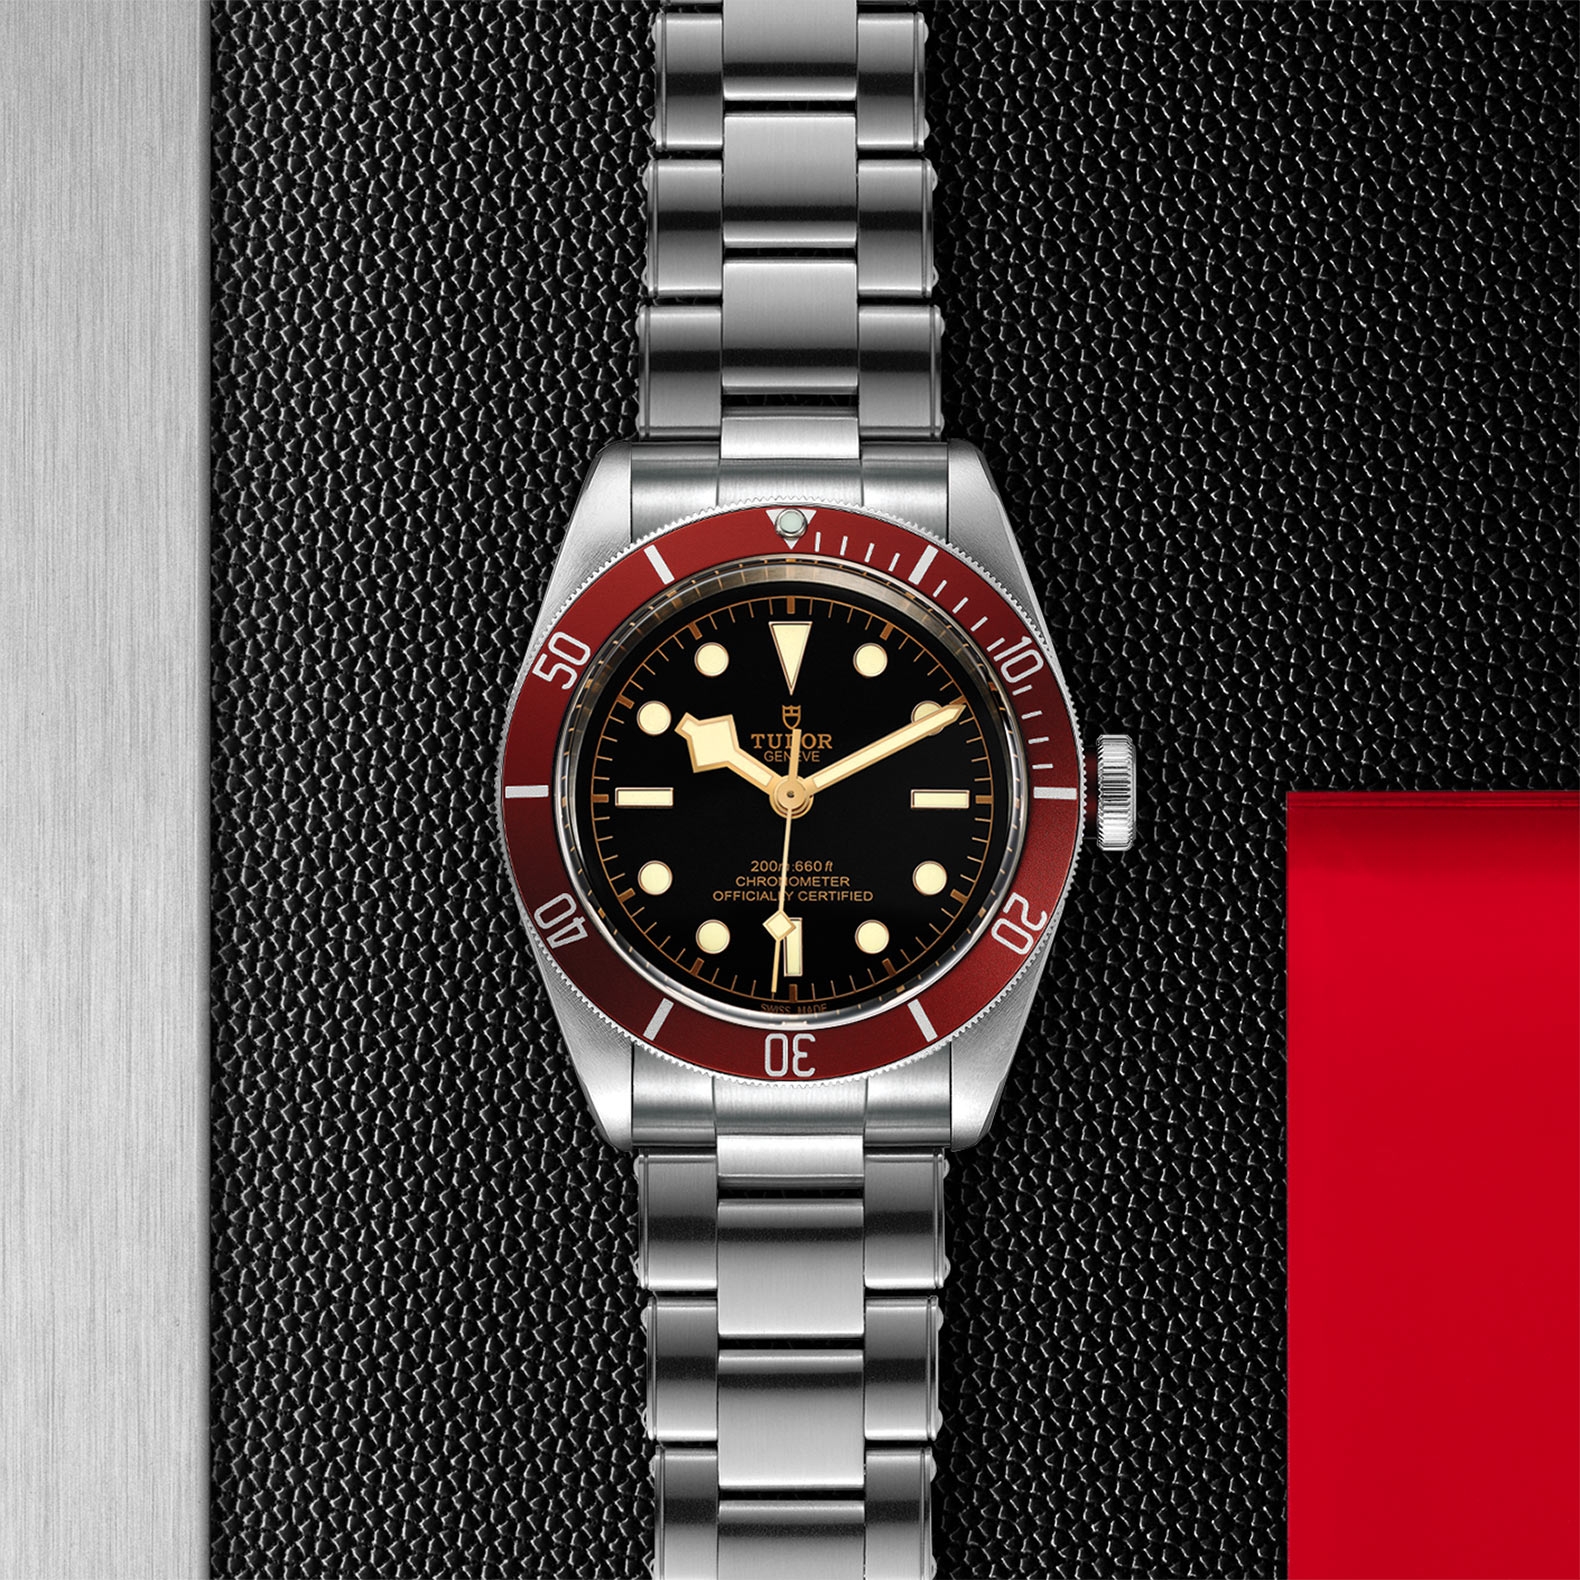 Tudor Black Bay - M79230R-0012 | Europe Watch Company